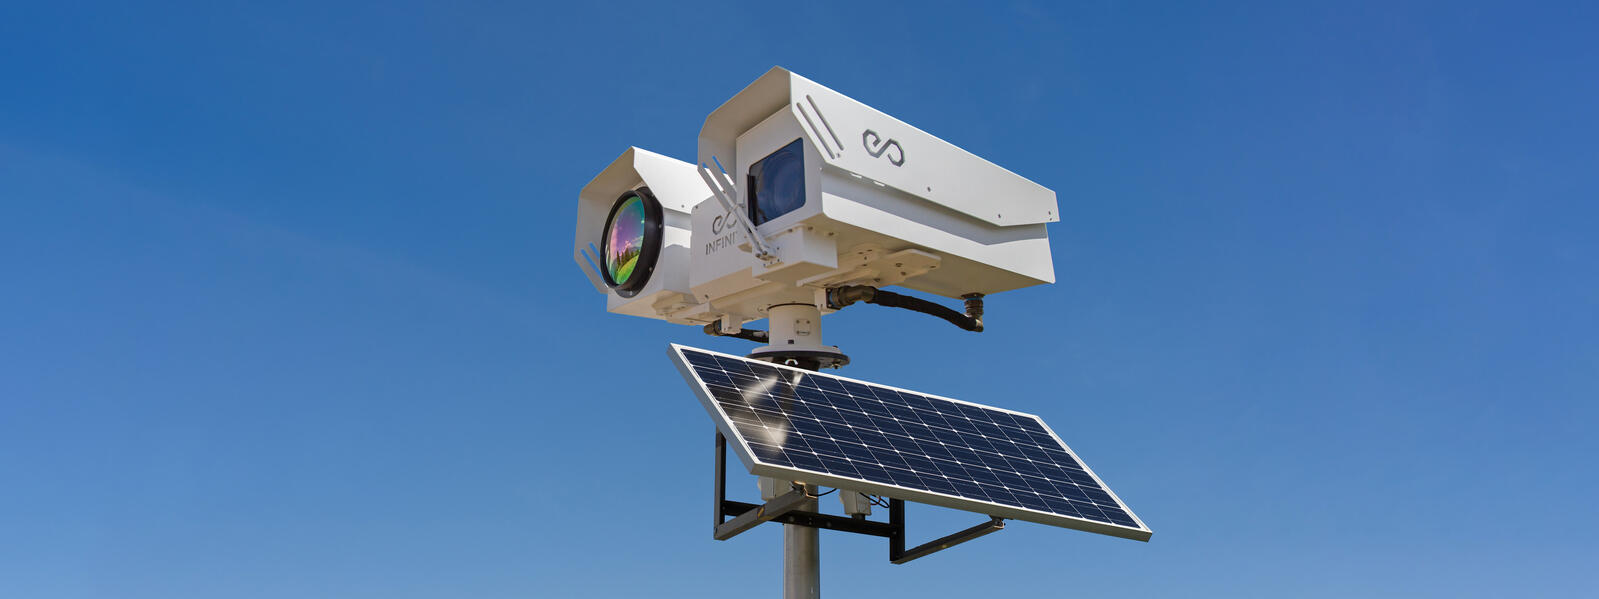 Vega PTZ camera system with solar panel